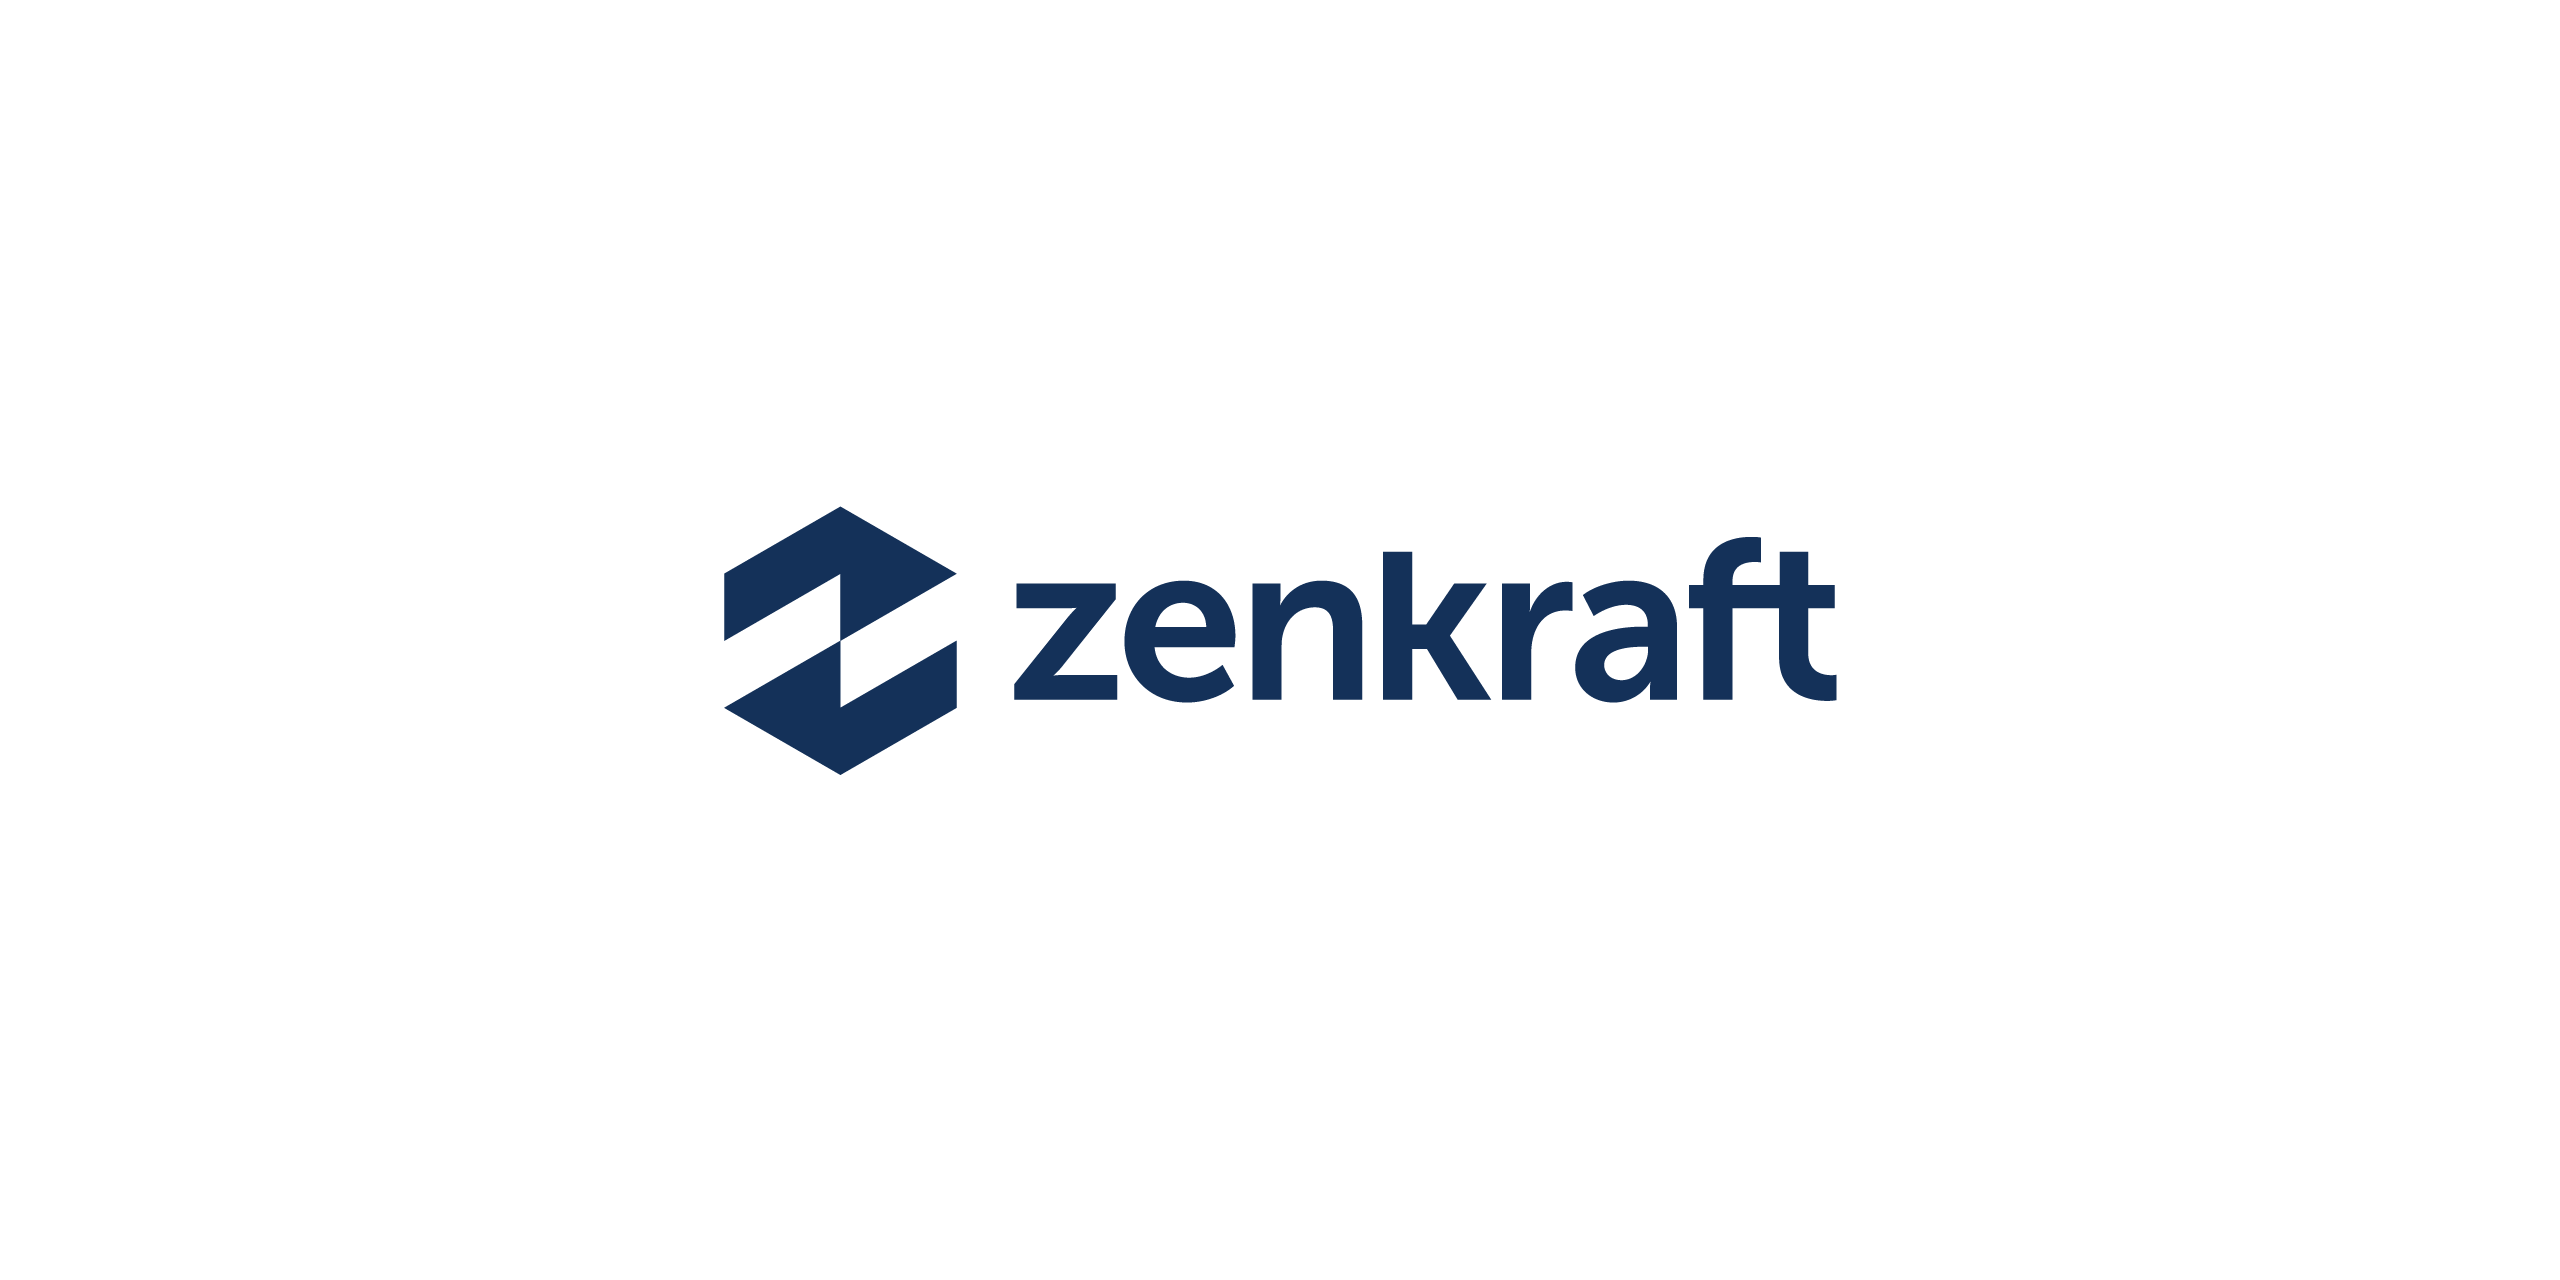 zenkraft_logo_for_white_background_by_brandforma